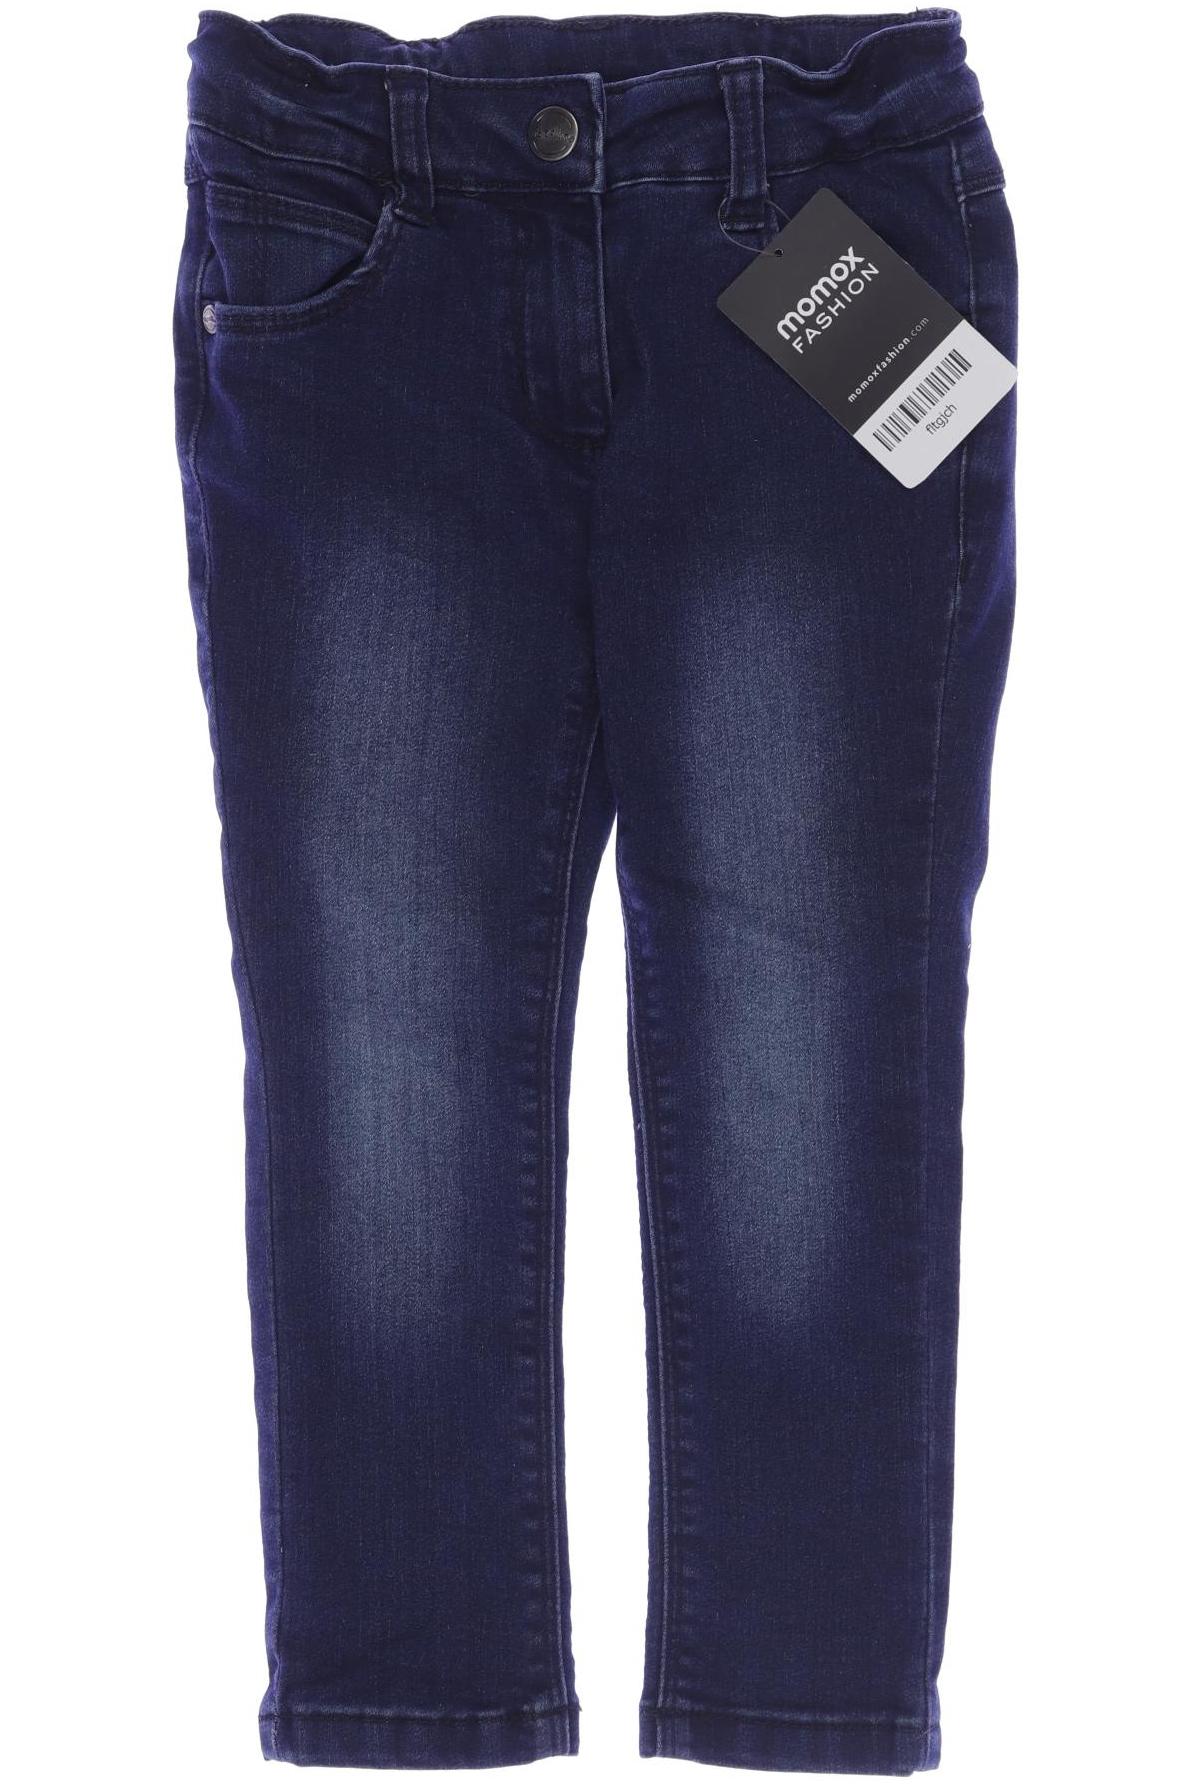 Topomini Damen Jeans, blau, Gr. 98 von Topomini